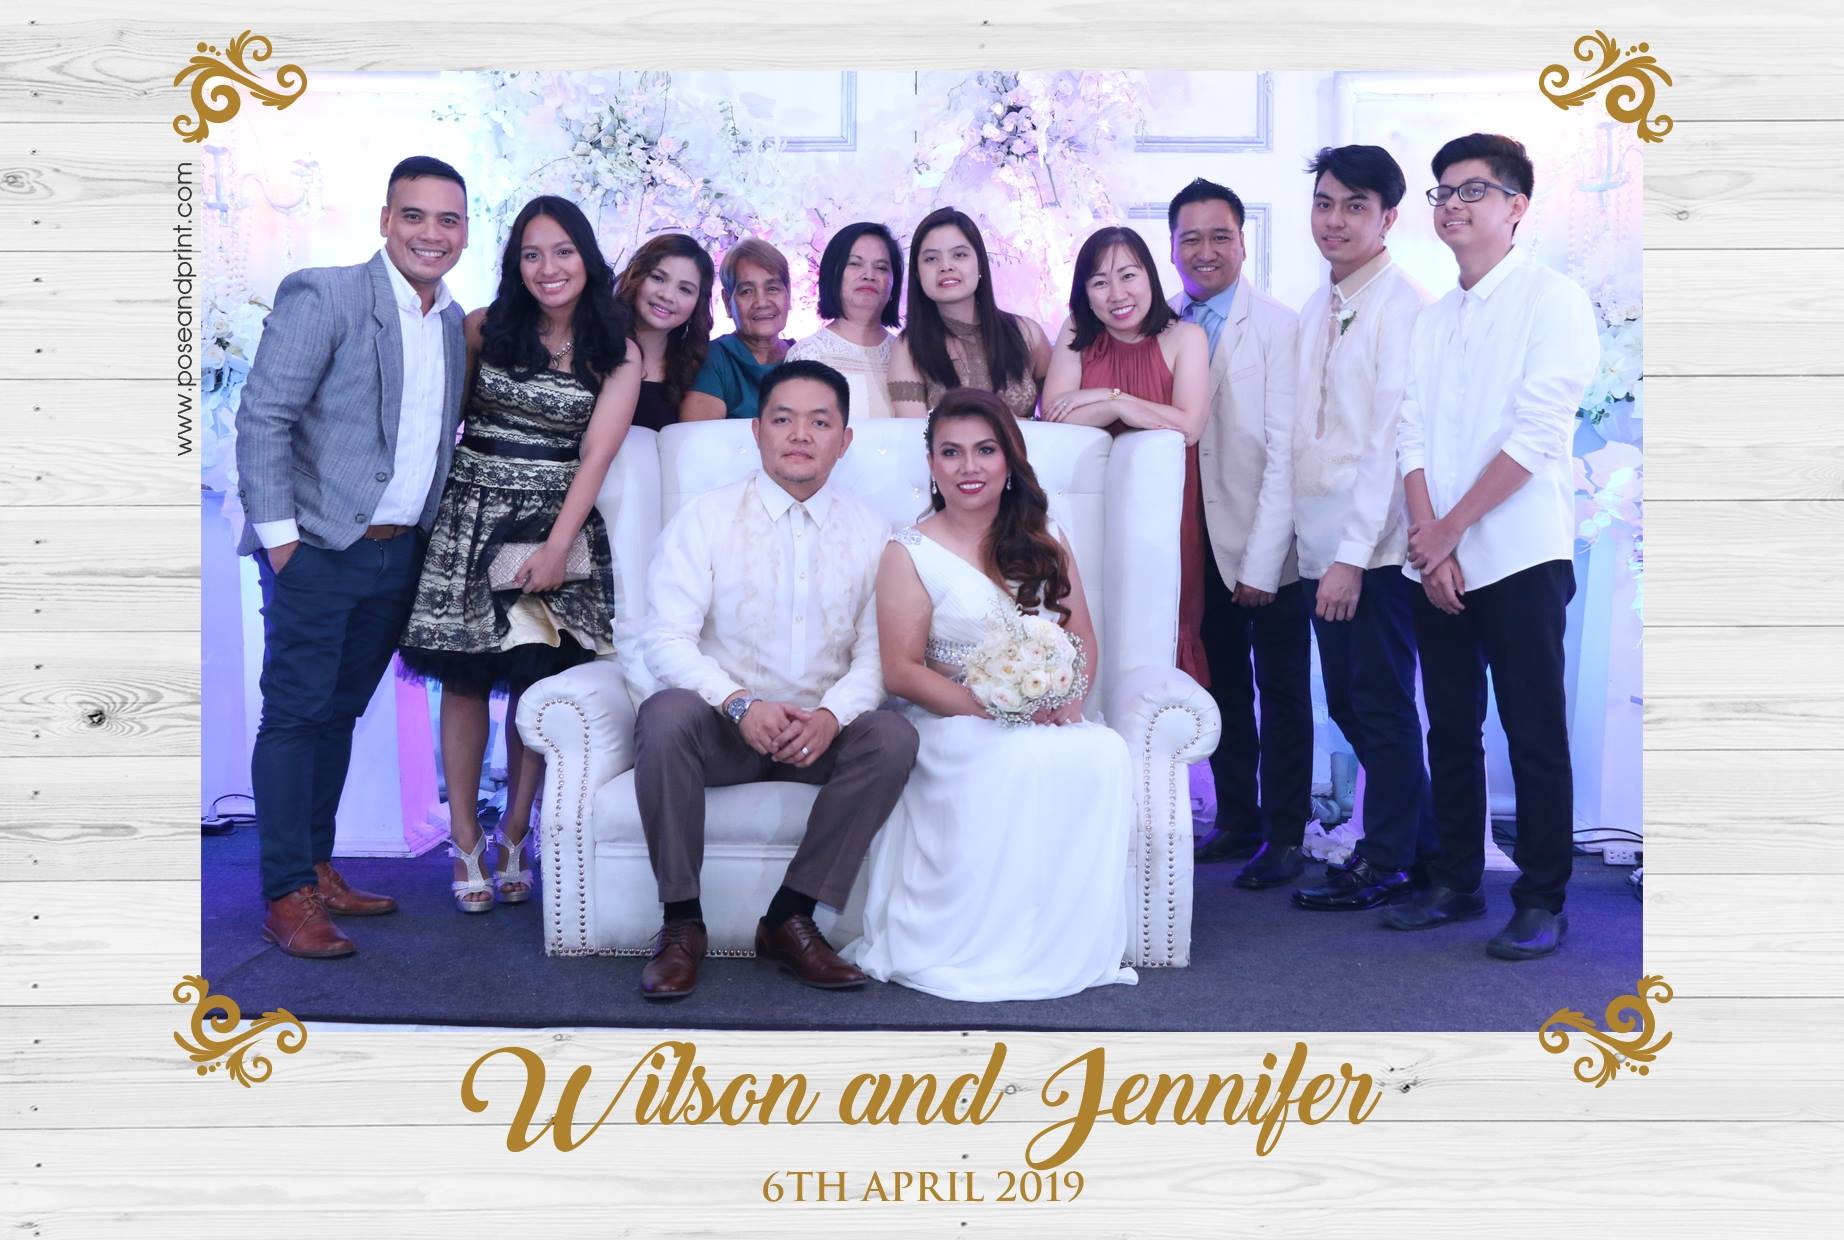 Wilson and Jennifer’s Wedding – Photoman